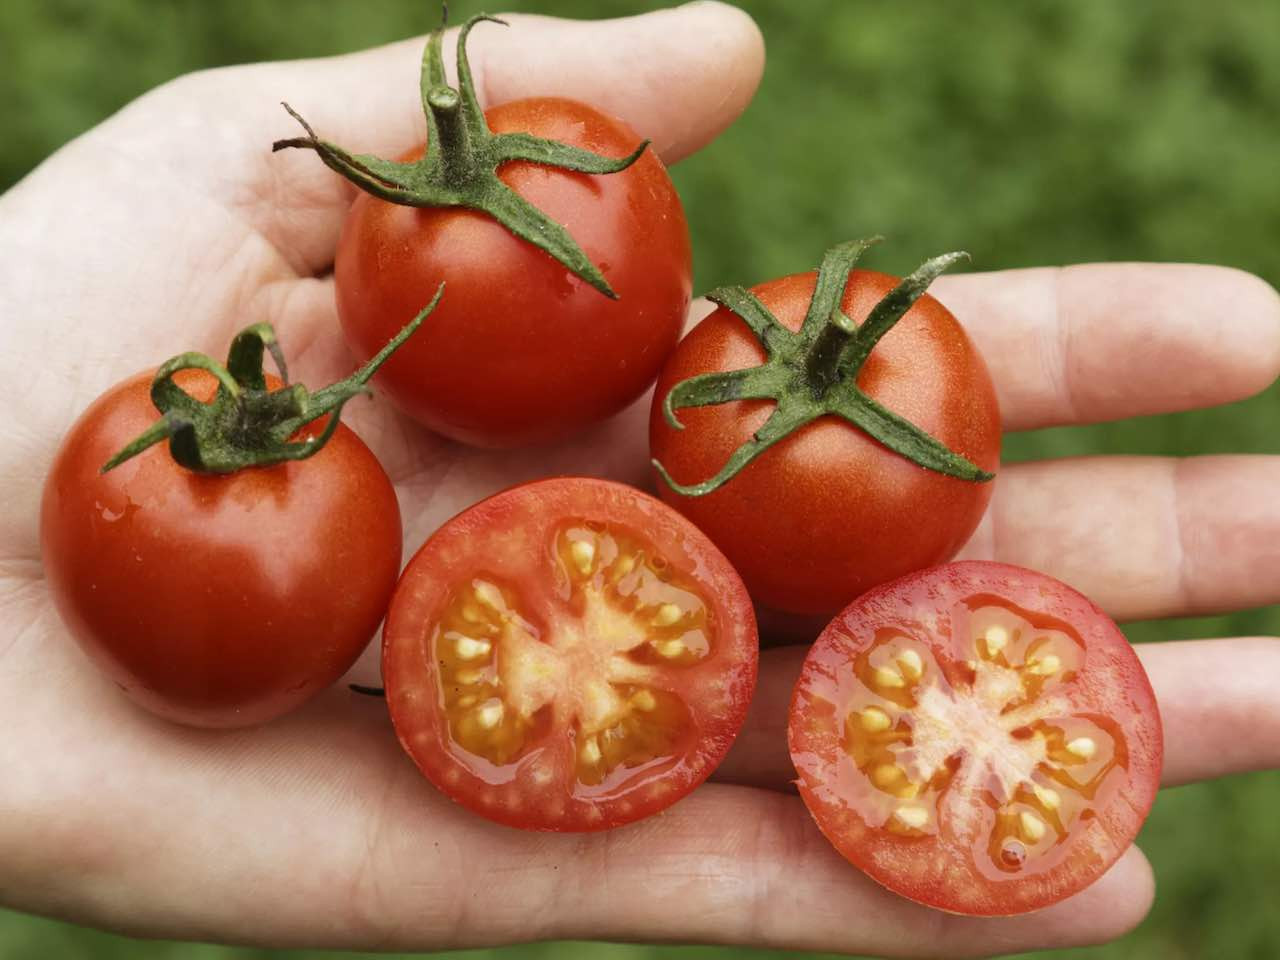 Brandywine Red Tomato organic seeds heirloom best tasting ireland